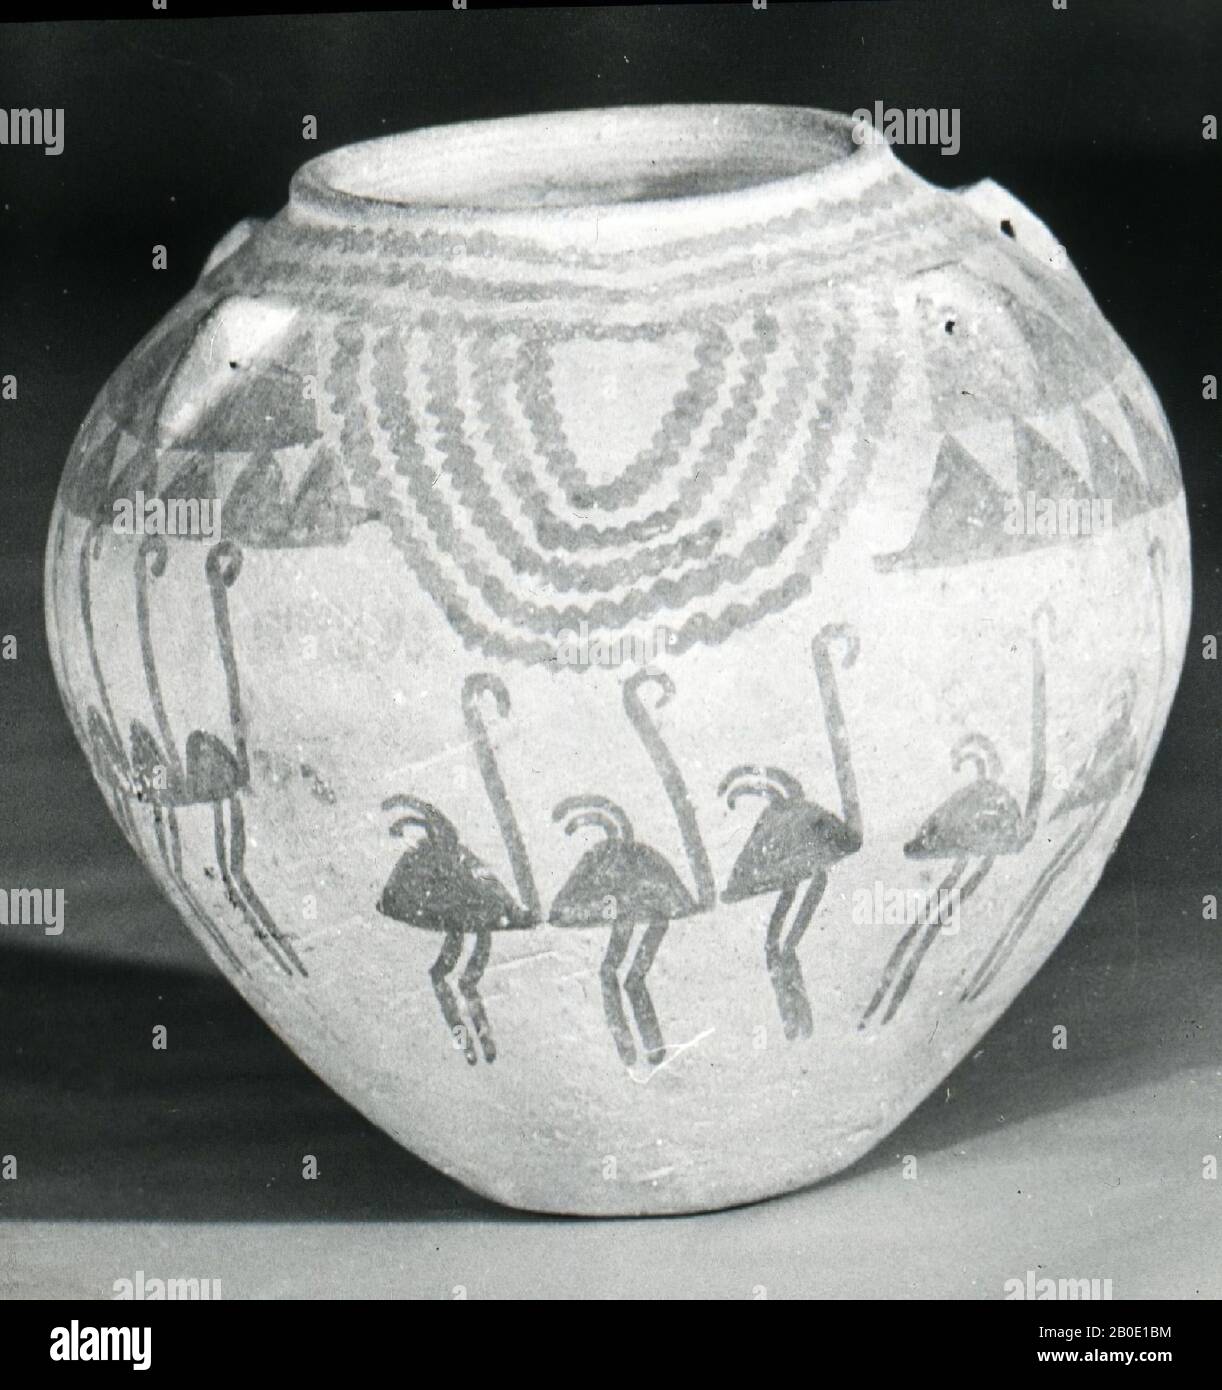 Egypt, pot, earthenware, 15 × 17 cm, Prehistory, Nagada II d1 Period 3500-3300 BC, Egypt Stock Photo